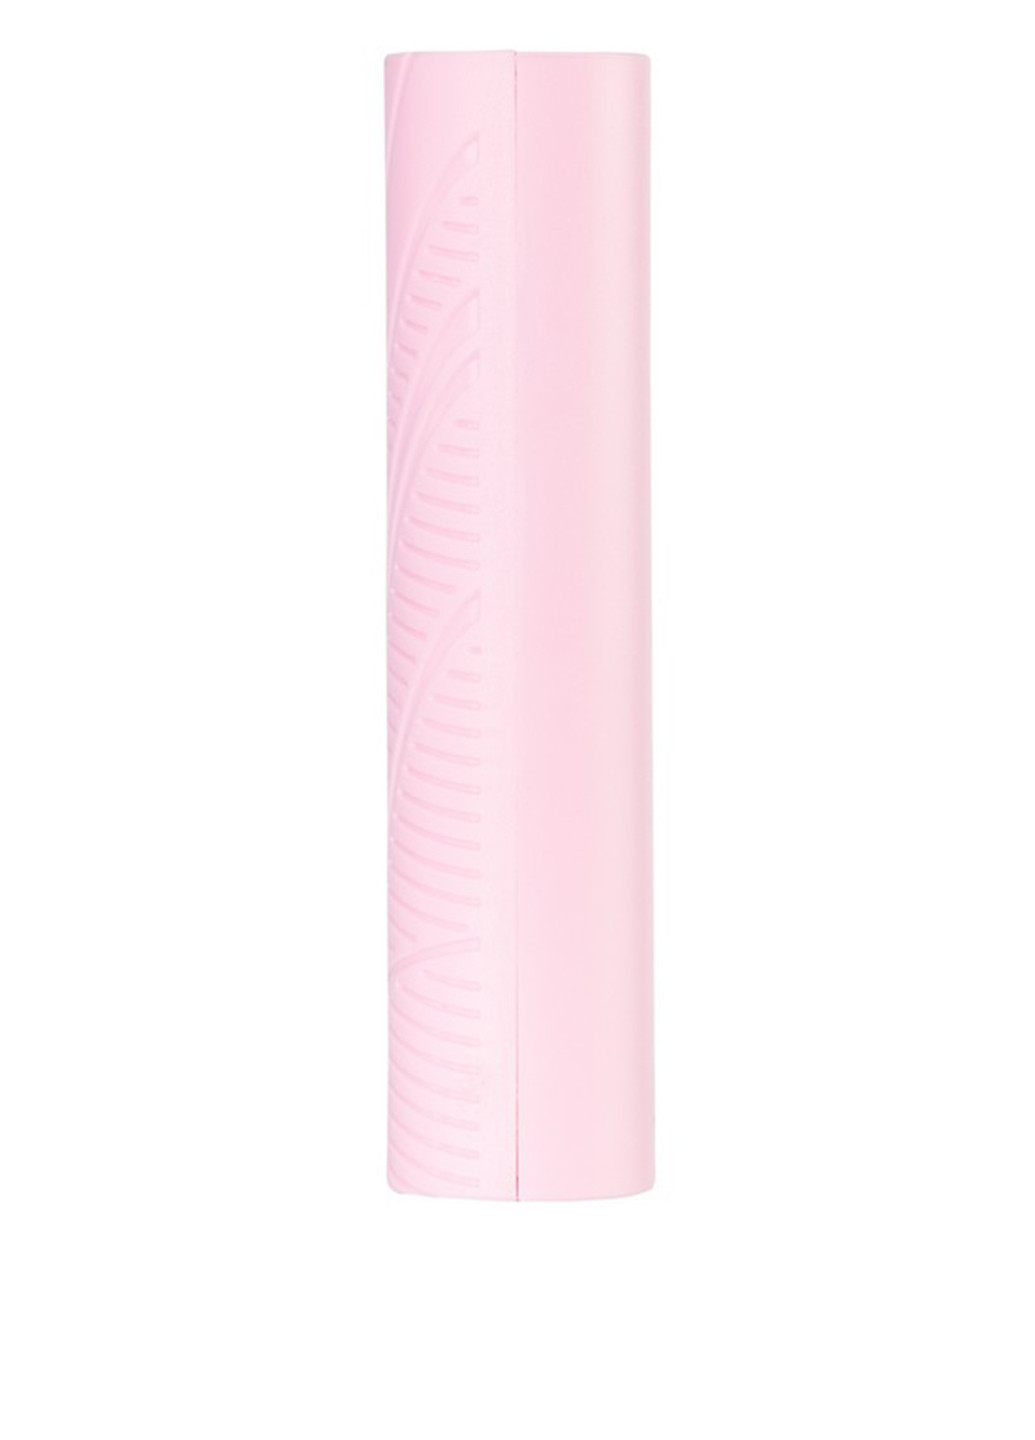 Універсальна батарея 4000mAh Pink Optima opb-4 (130135418)